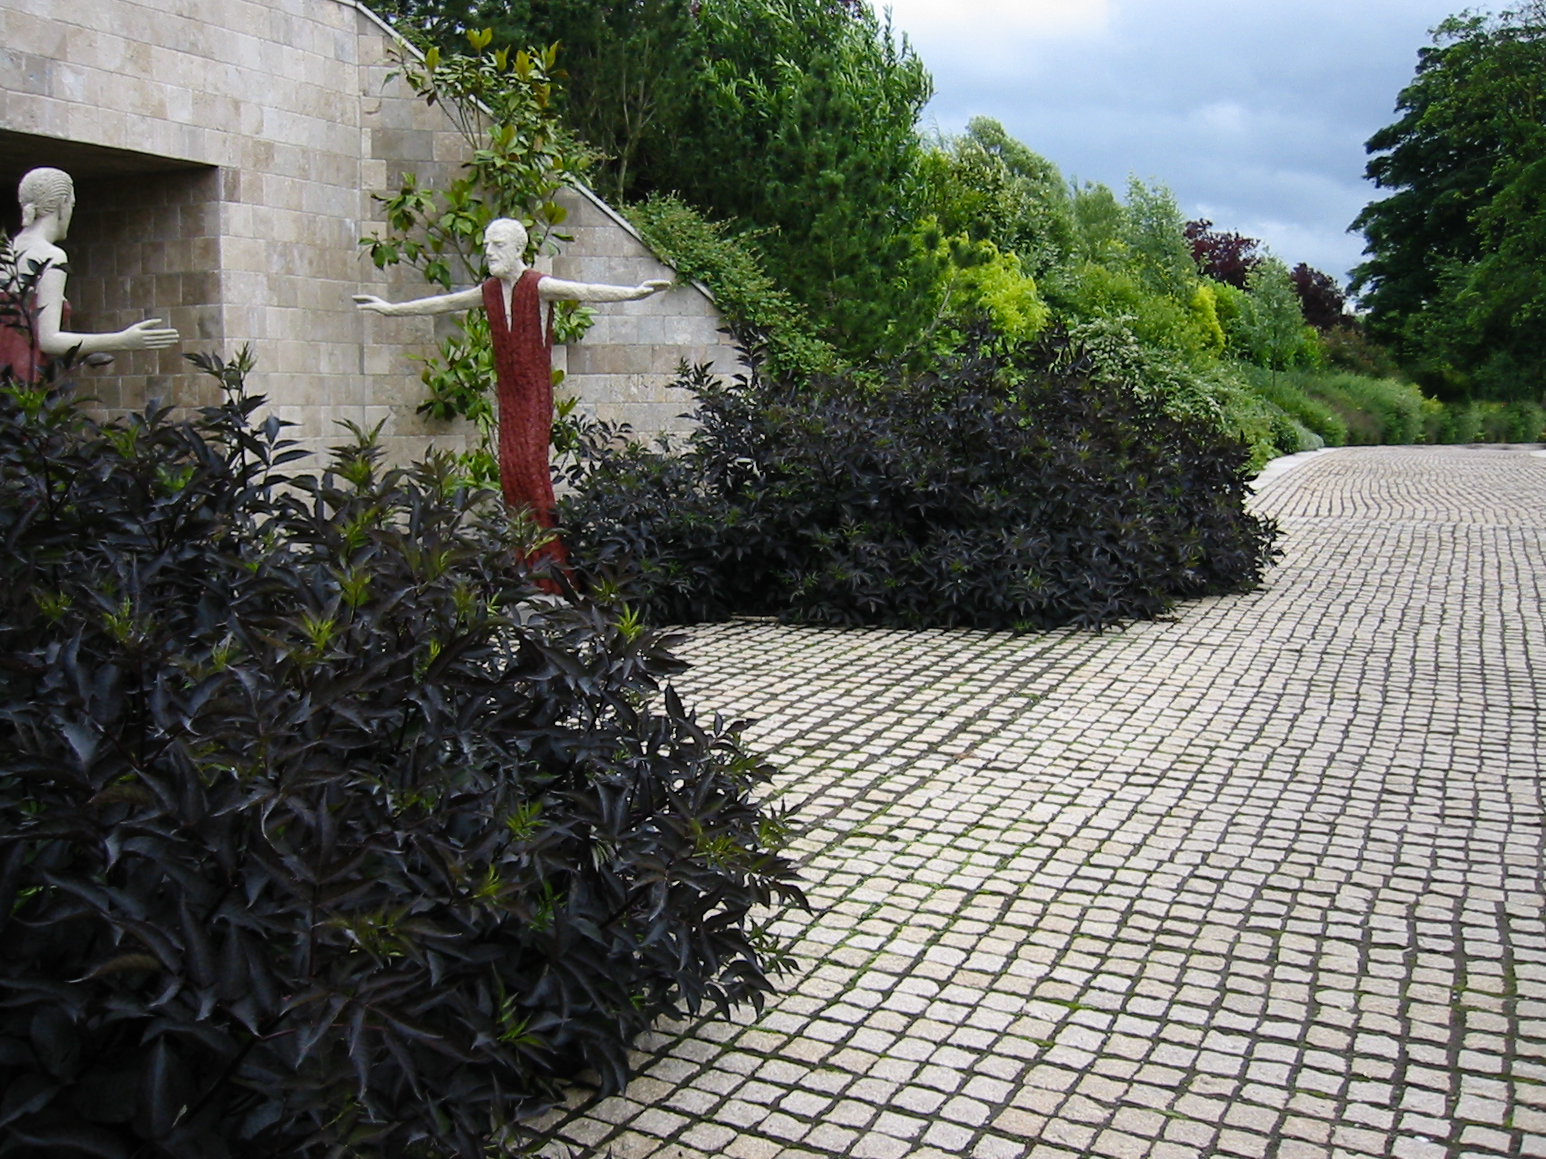 Garden Inspiration, Modern Cheshire Garden, Thinking Outside the Boxwood: Sambucus nigra 'Black Beauty' - Black Beauty Elderberry 